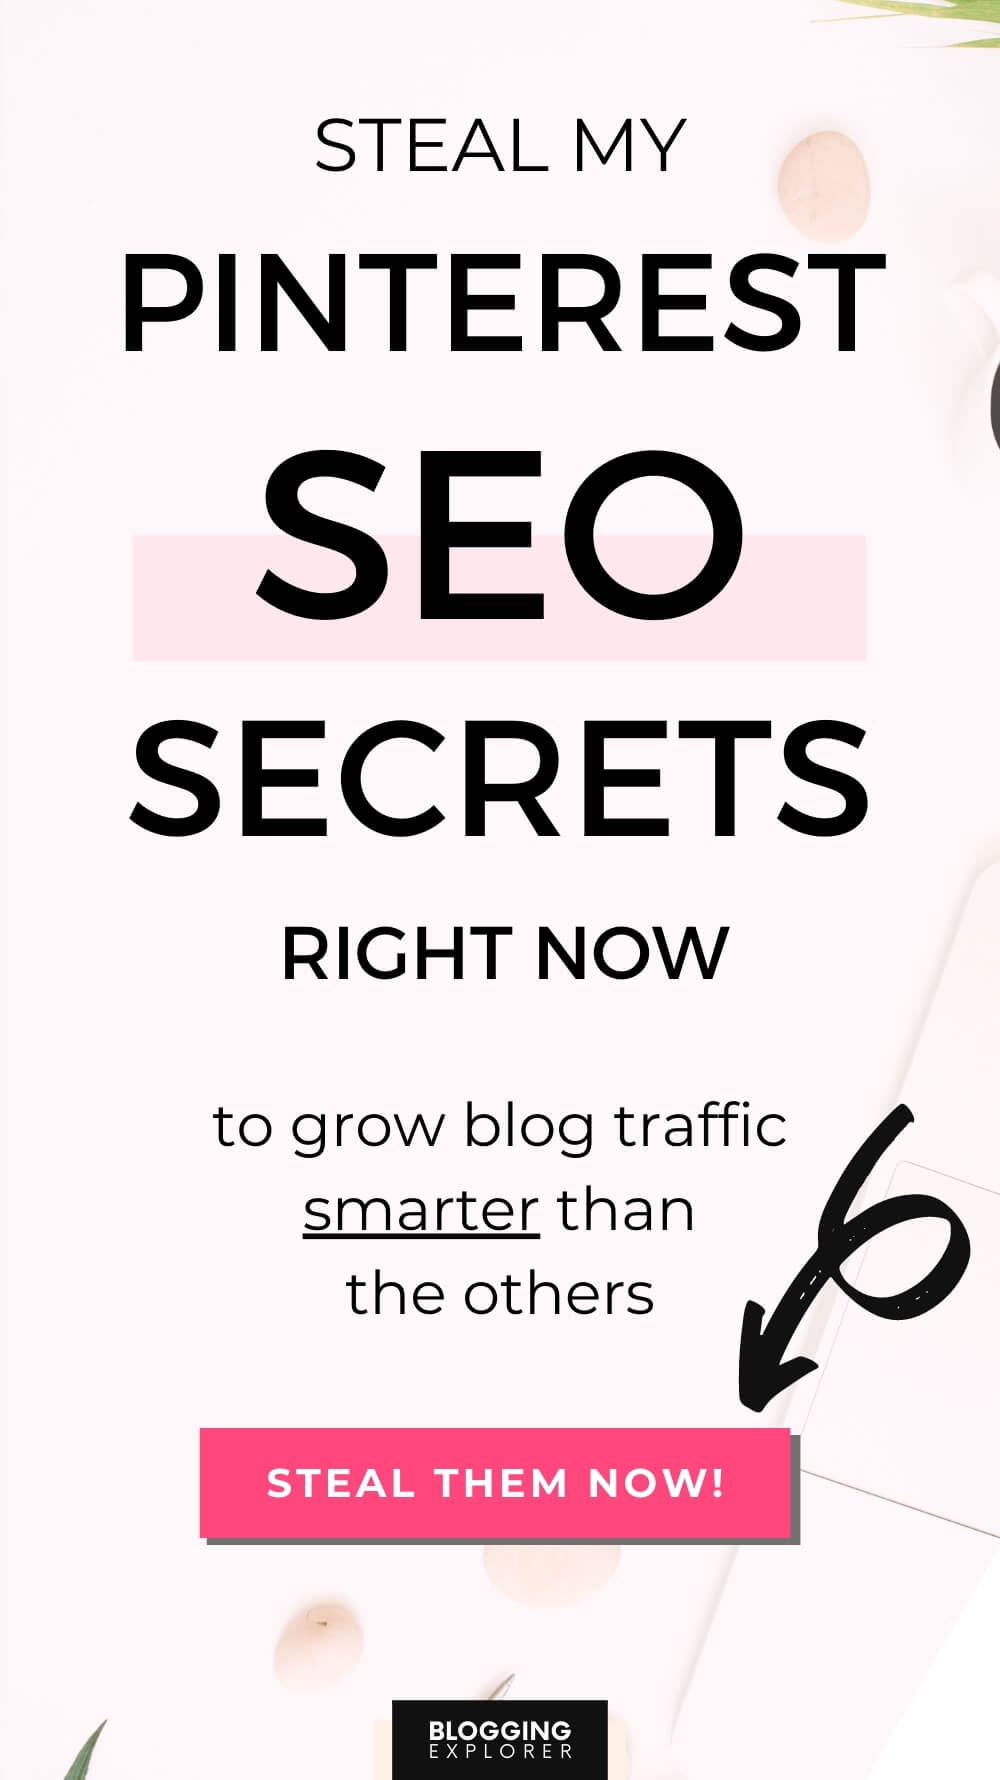 Pinterest SEO secrets - Grow blog traffic faster